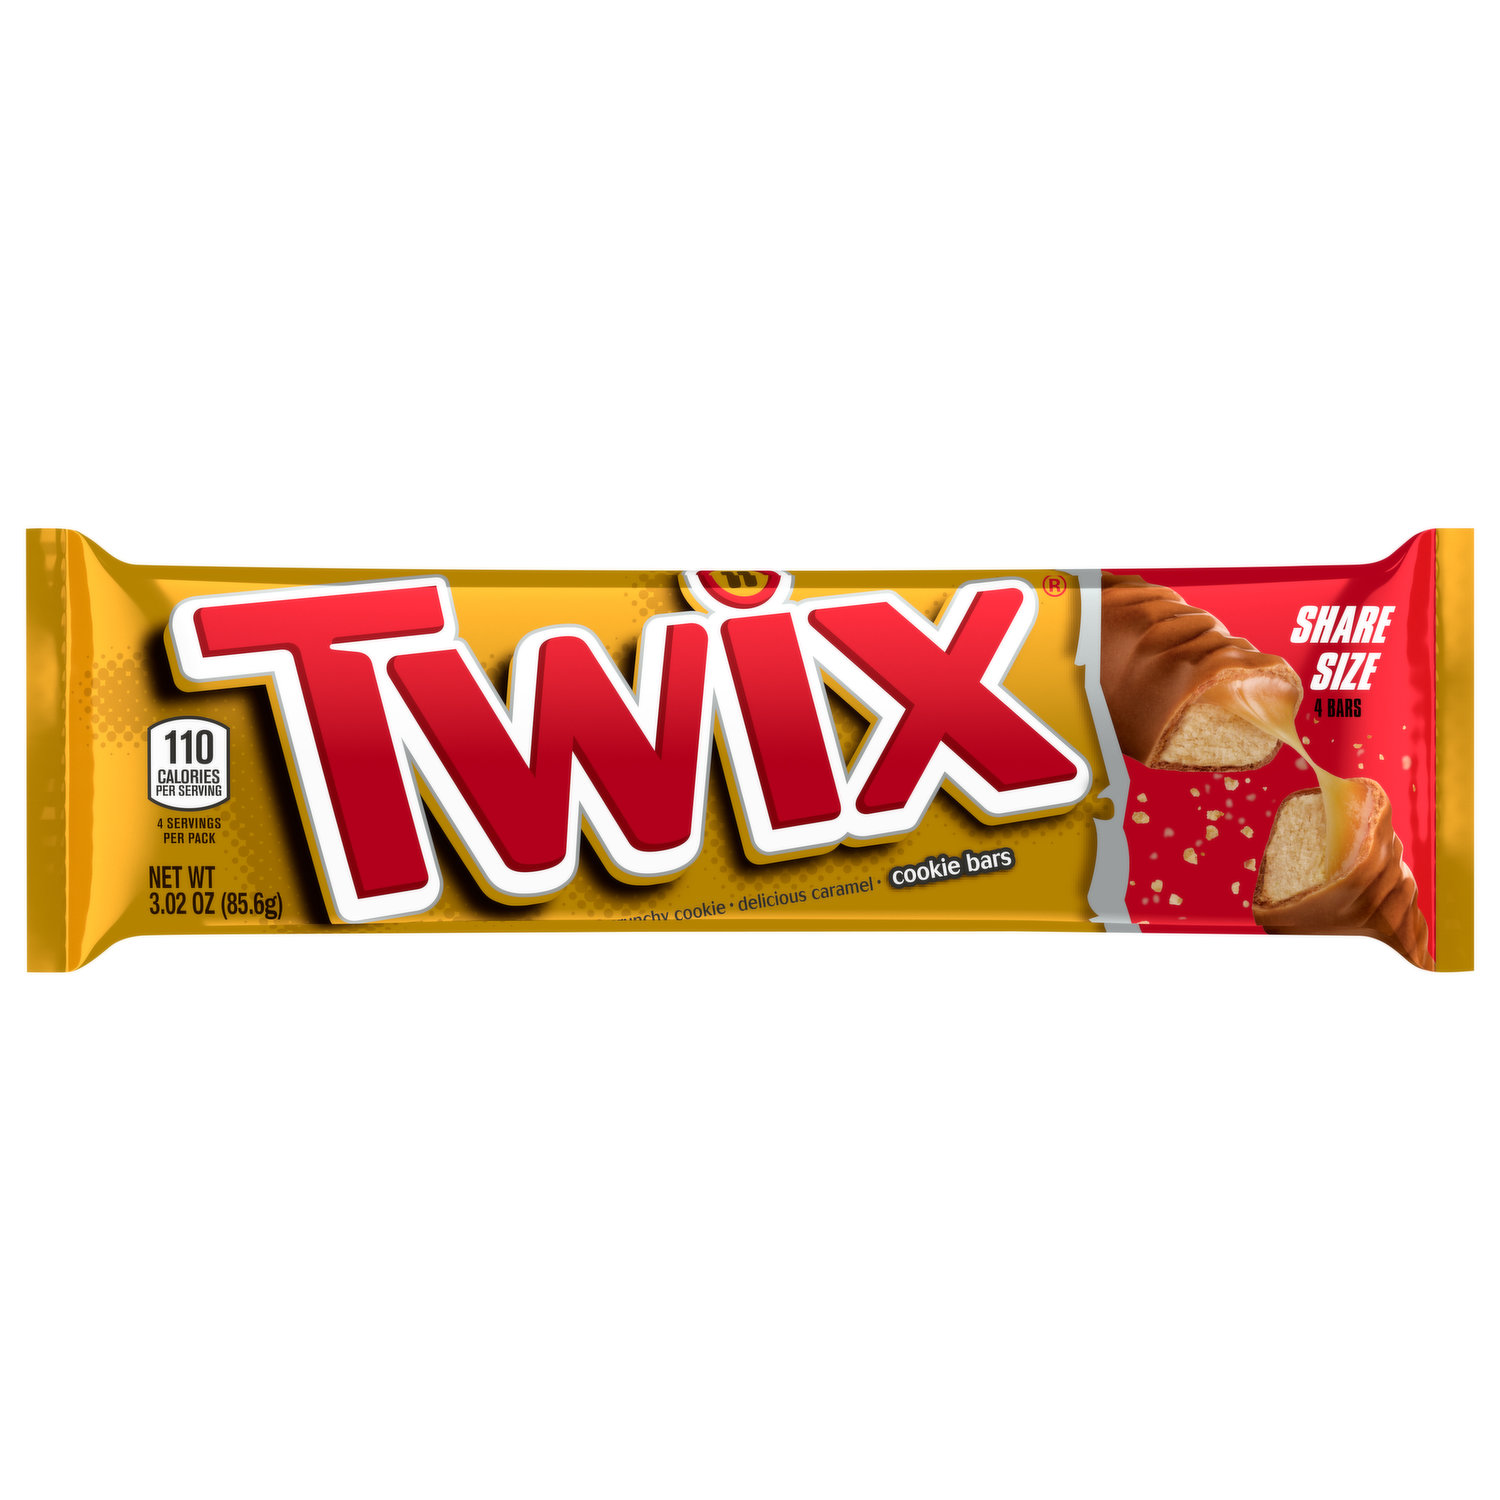 Twix Full Size Caramel Chocolate Cookie Candy Bar, 1.79 oz - Pick